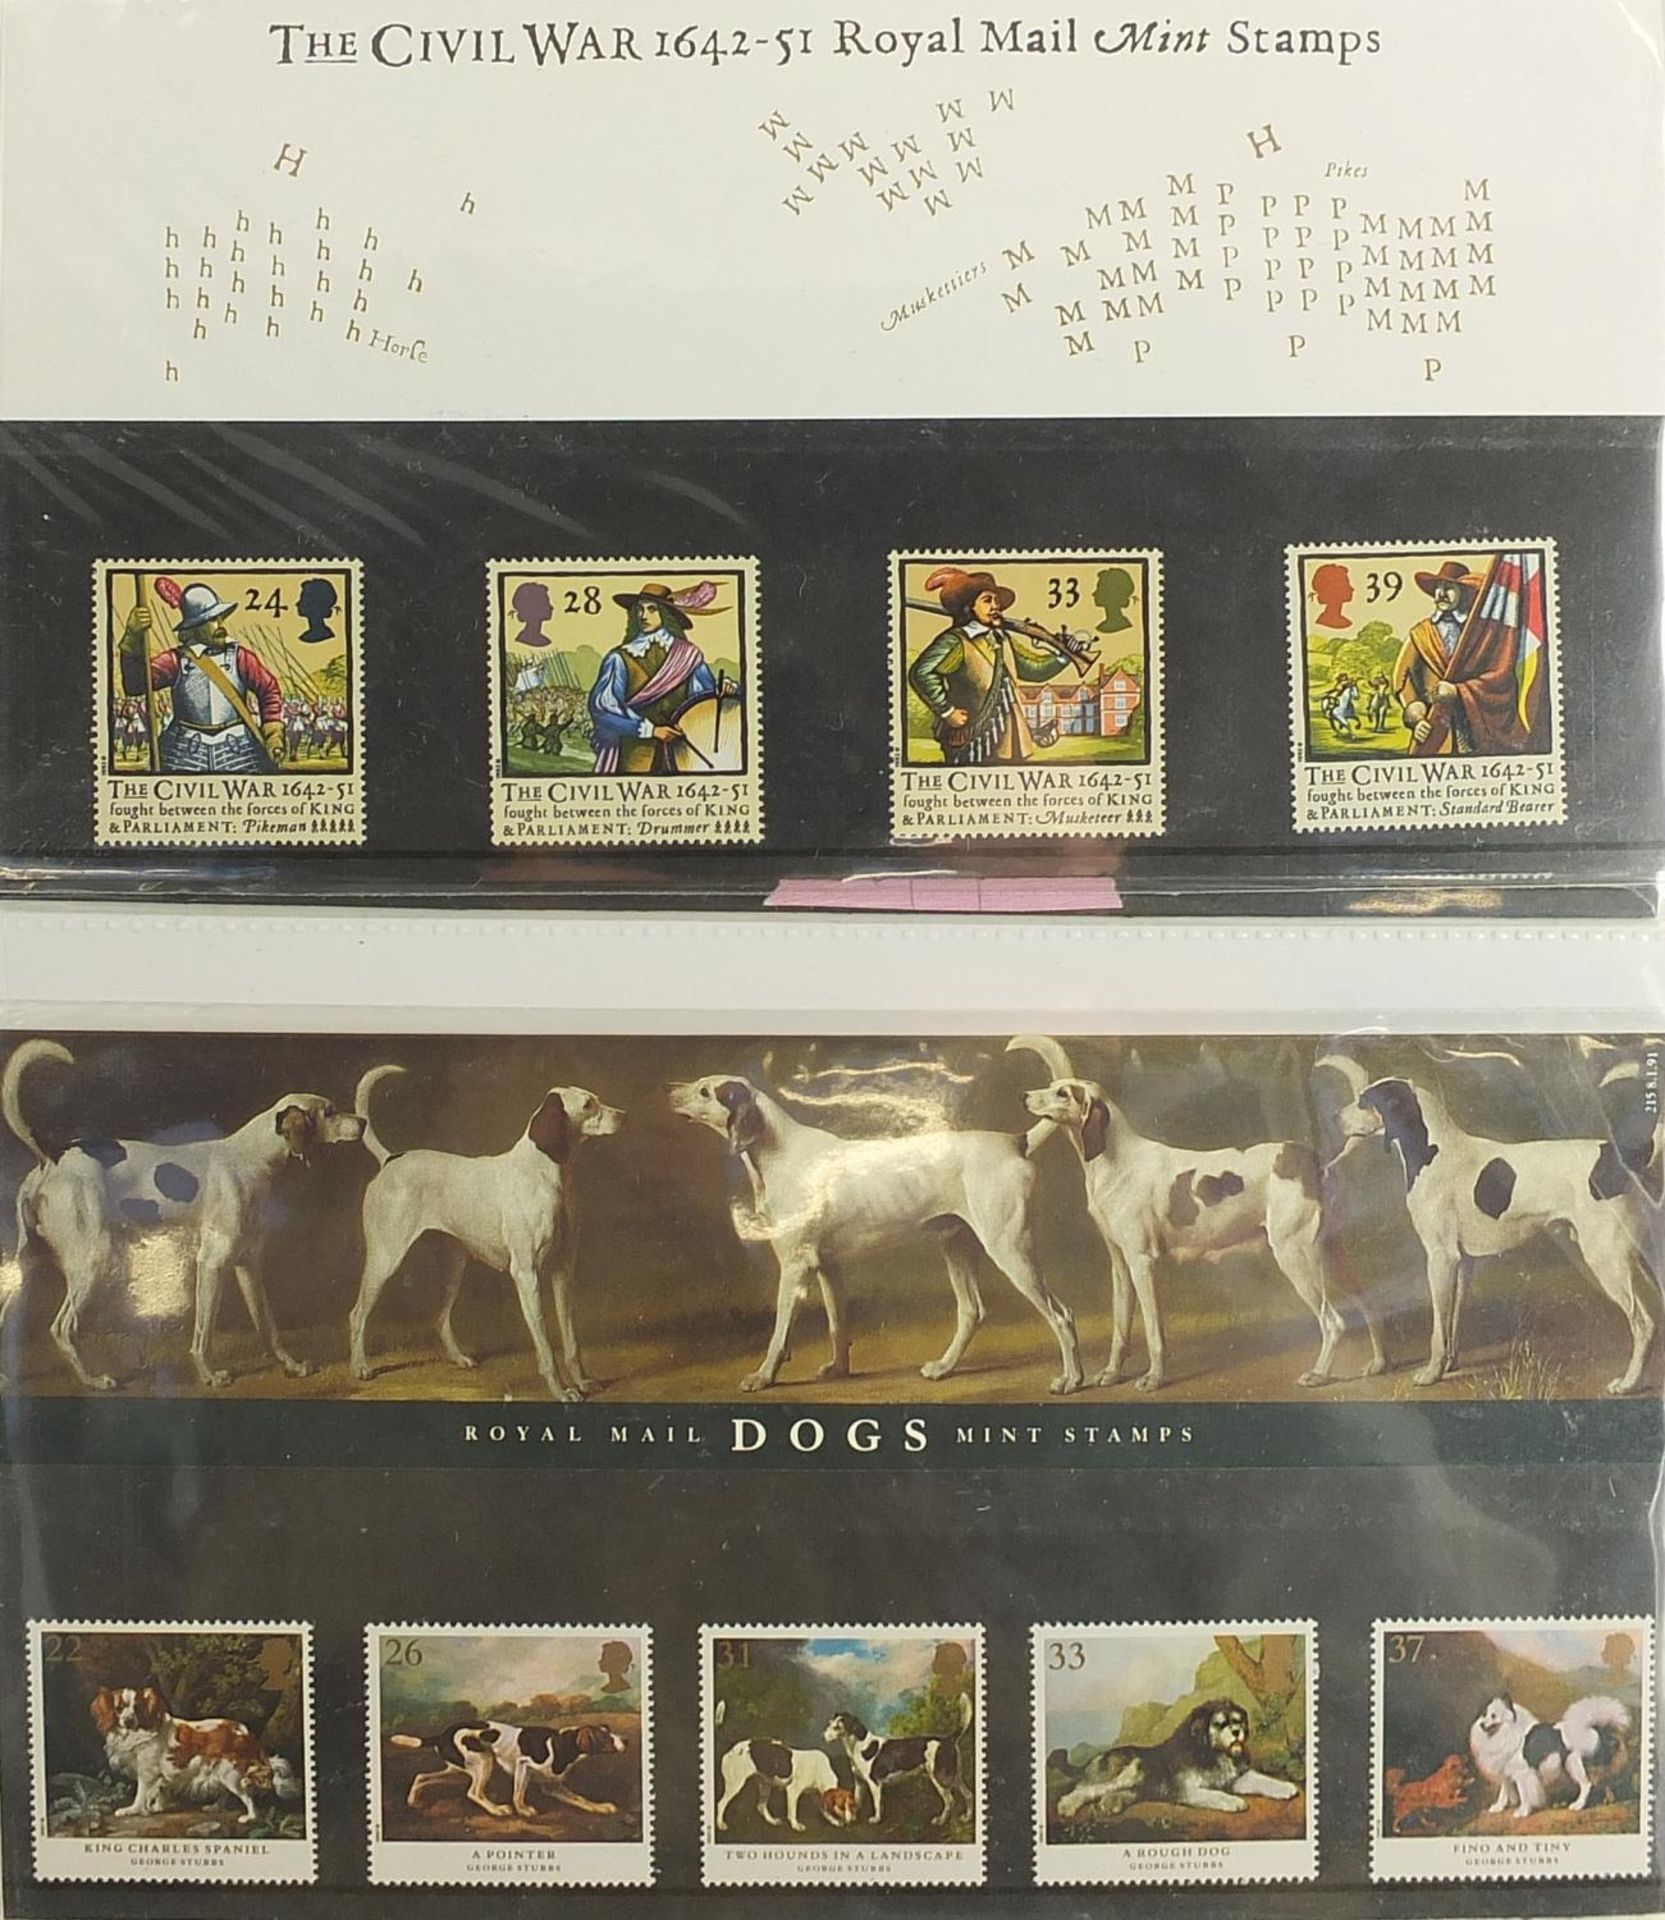 Royal Mint presentation packs arranged in a album - Image 3 of 6